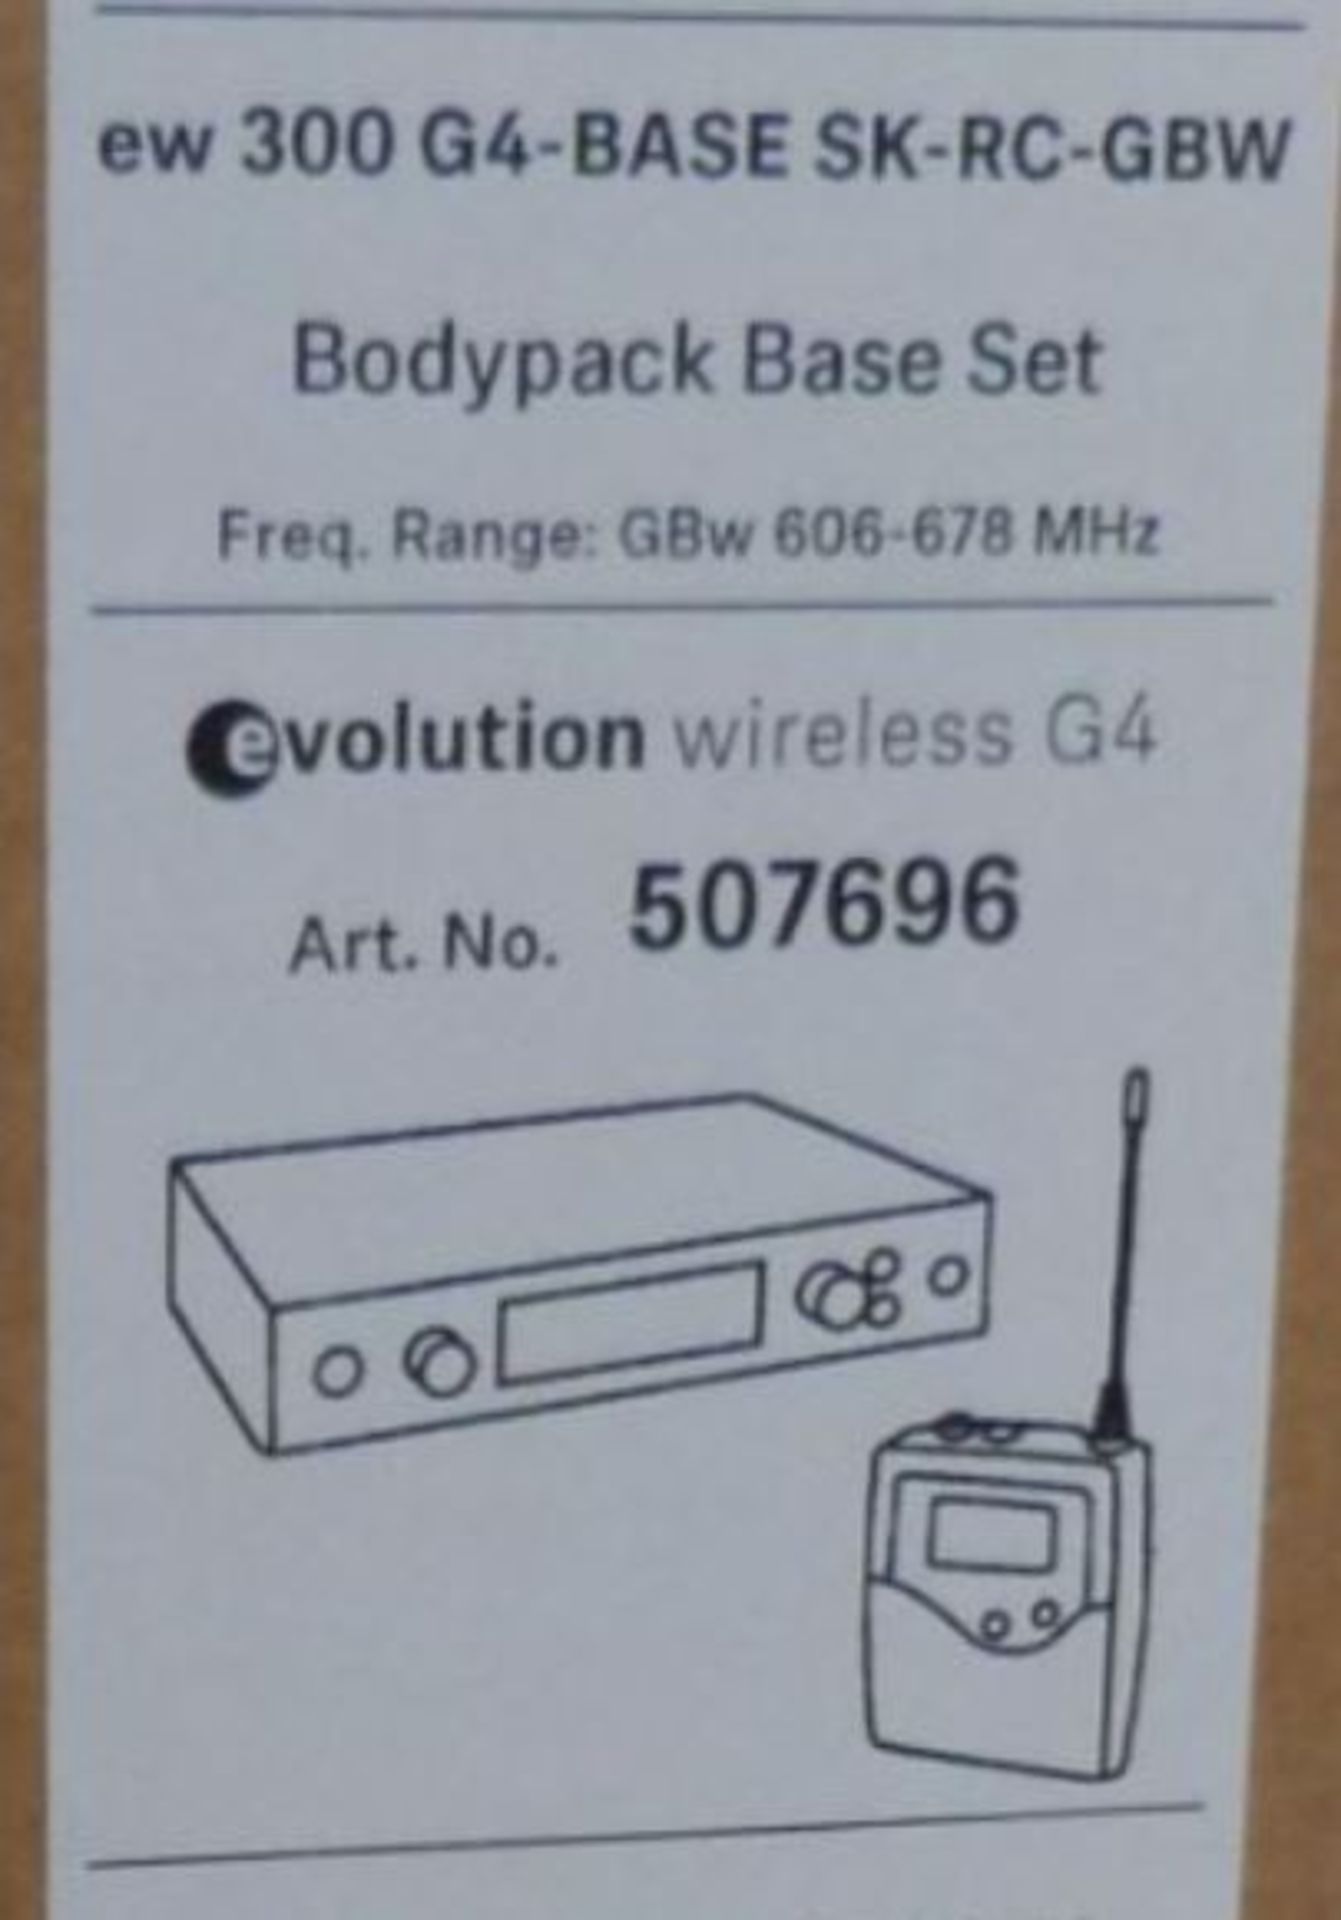 Sennheiser EW 300 G4-BASE SK-RC-GBW Bodypack Base Set 507696. In Cardboard. Serial No: 8348709859